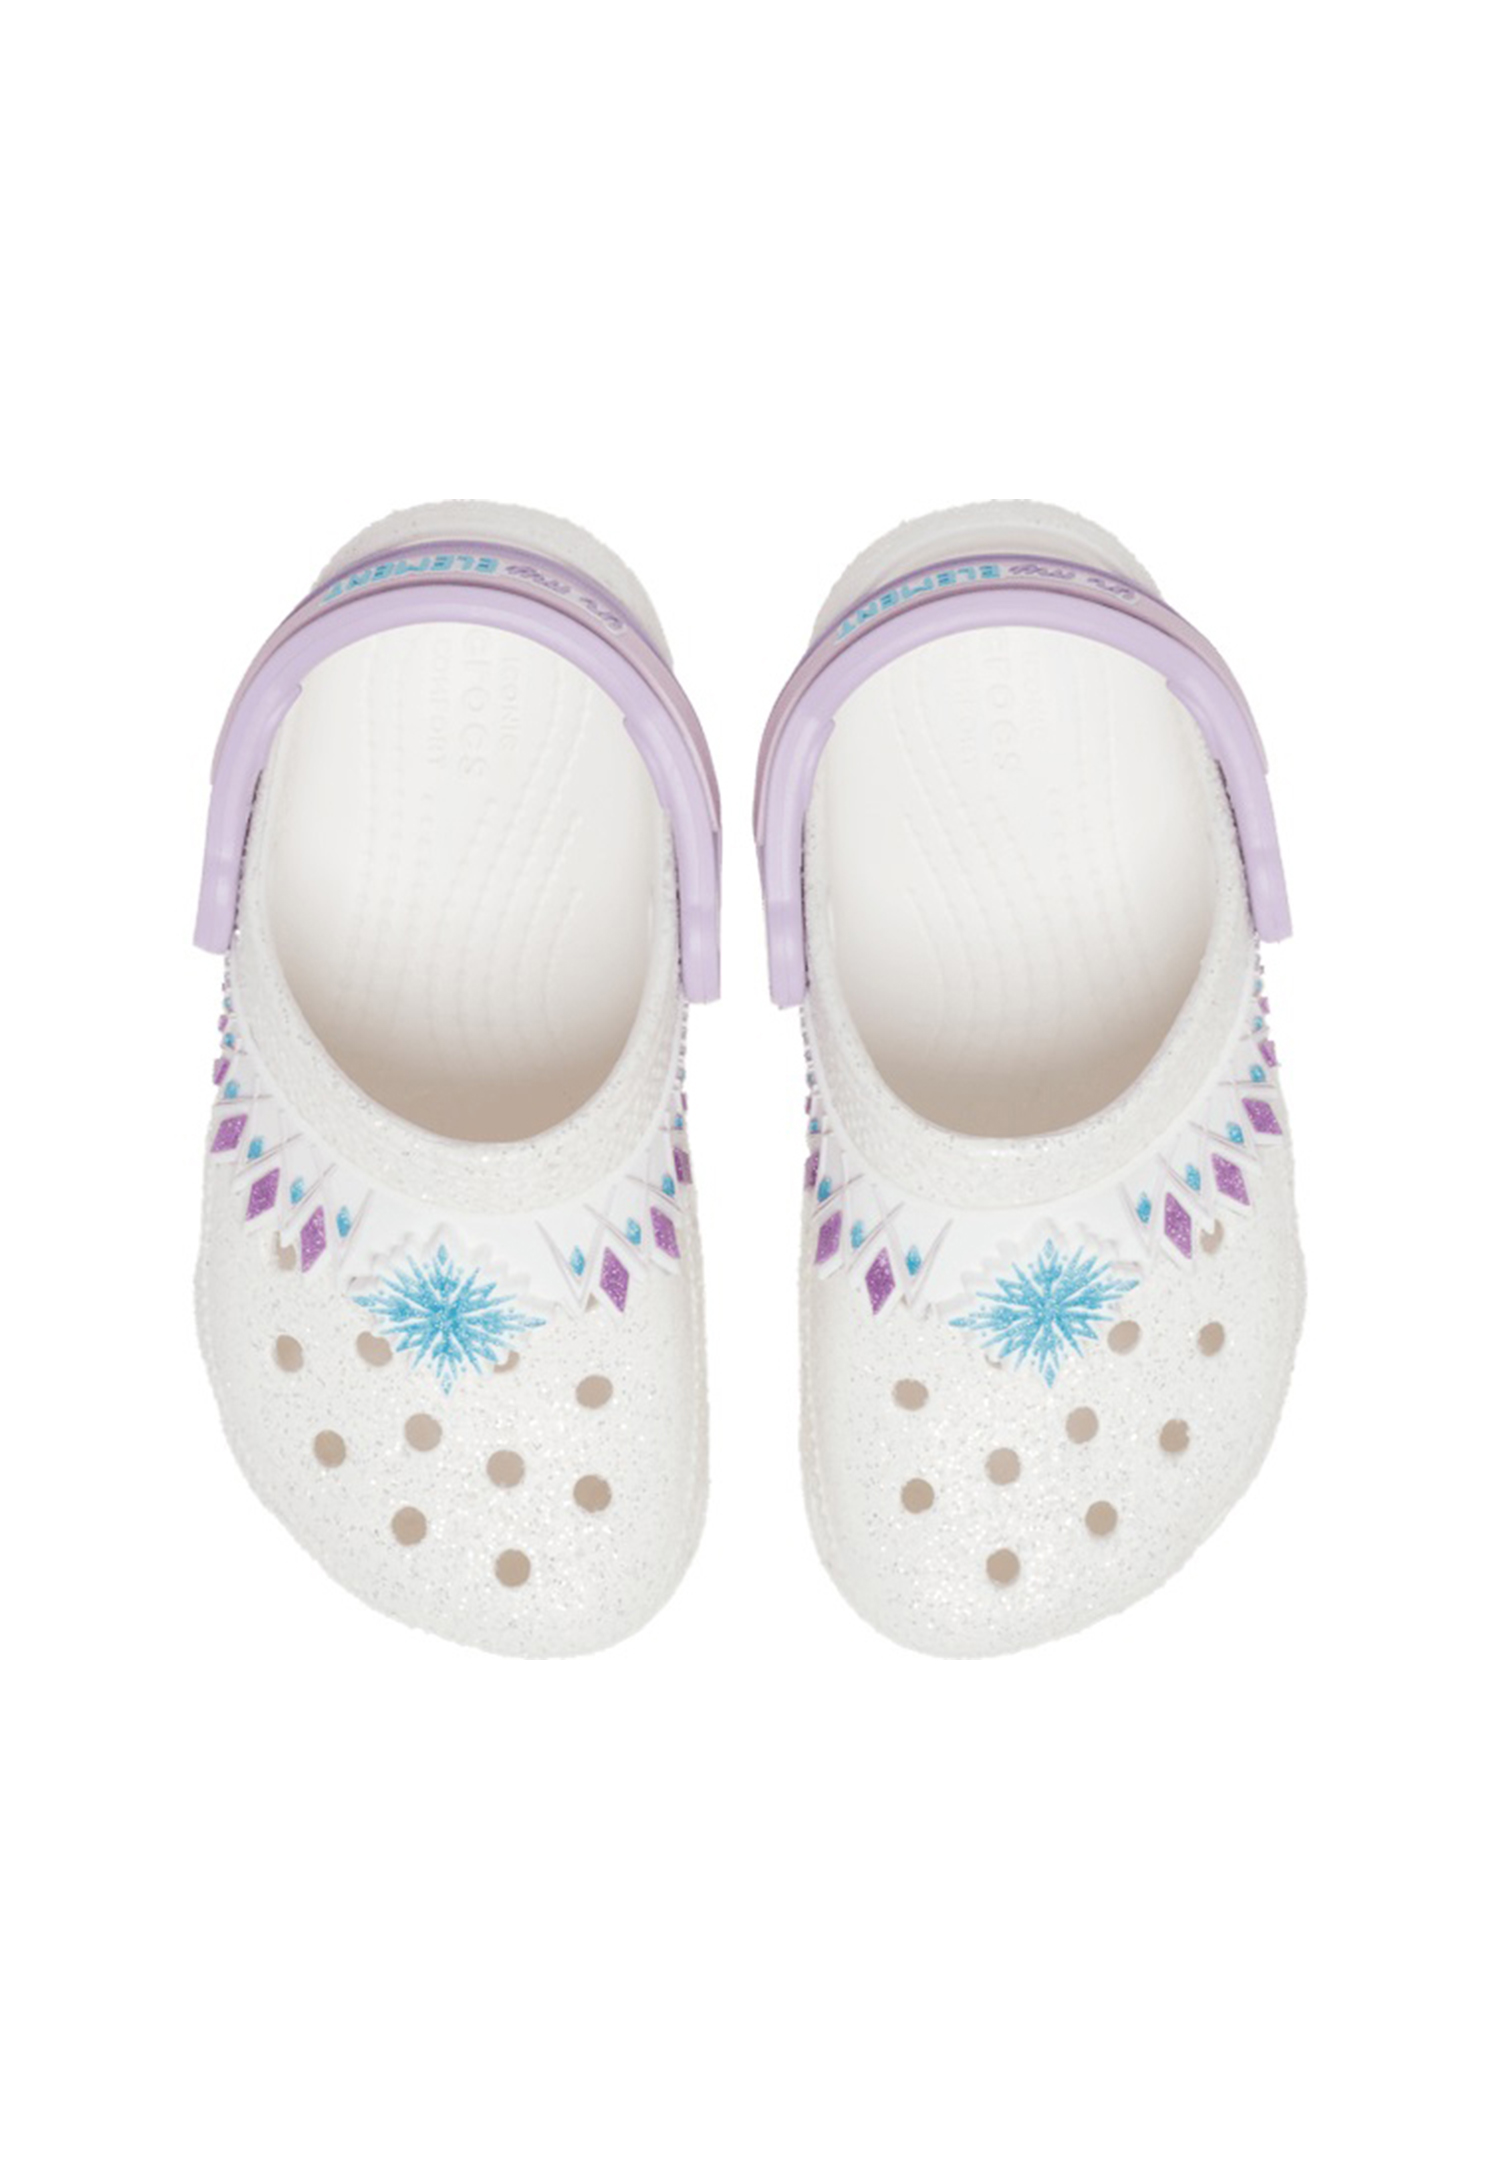 Crocs Kids Fun Lab I am Frozen II Clog T Sandale Schuhe 207715 weiss